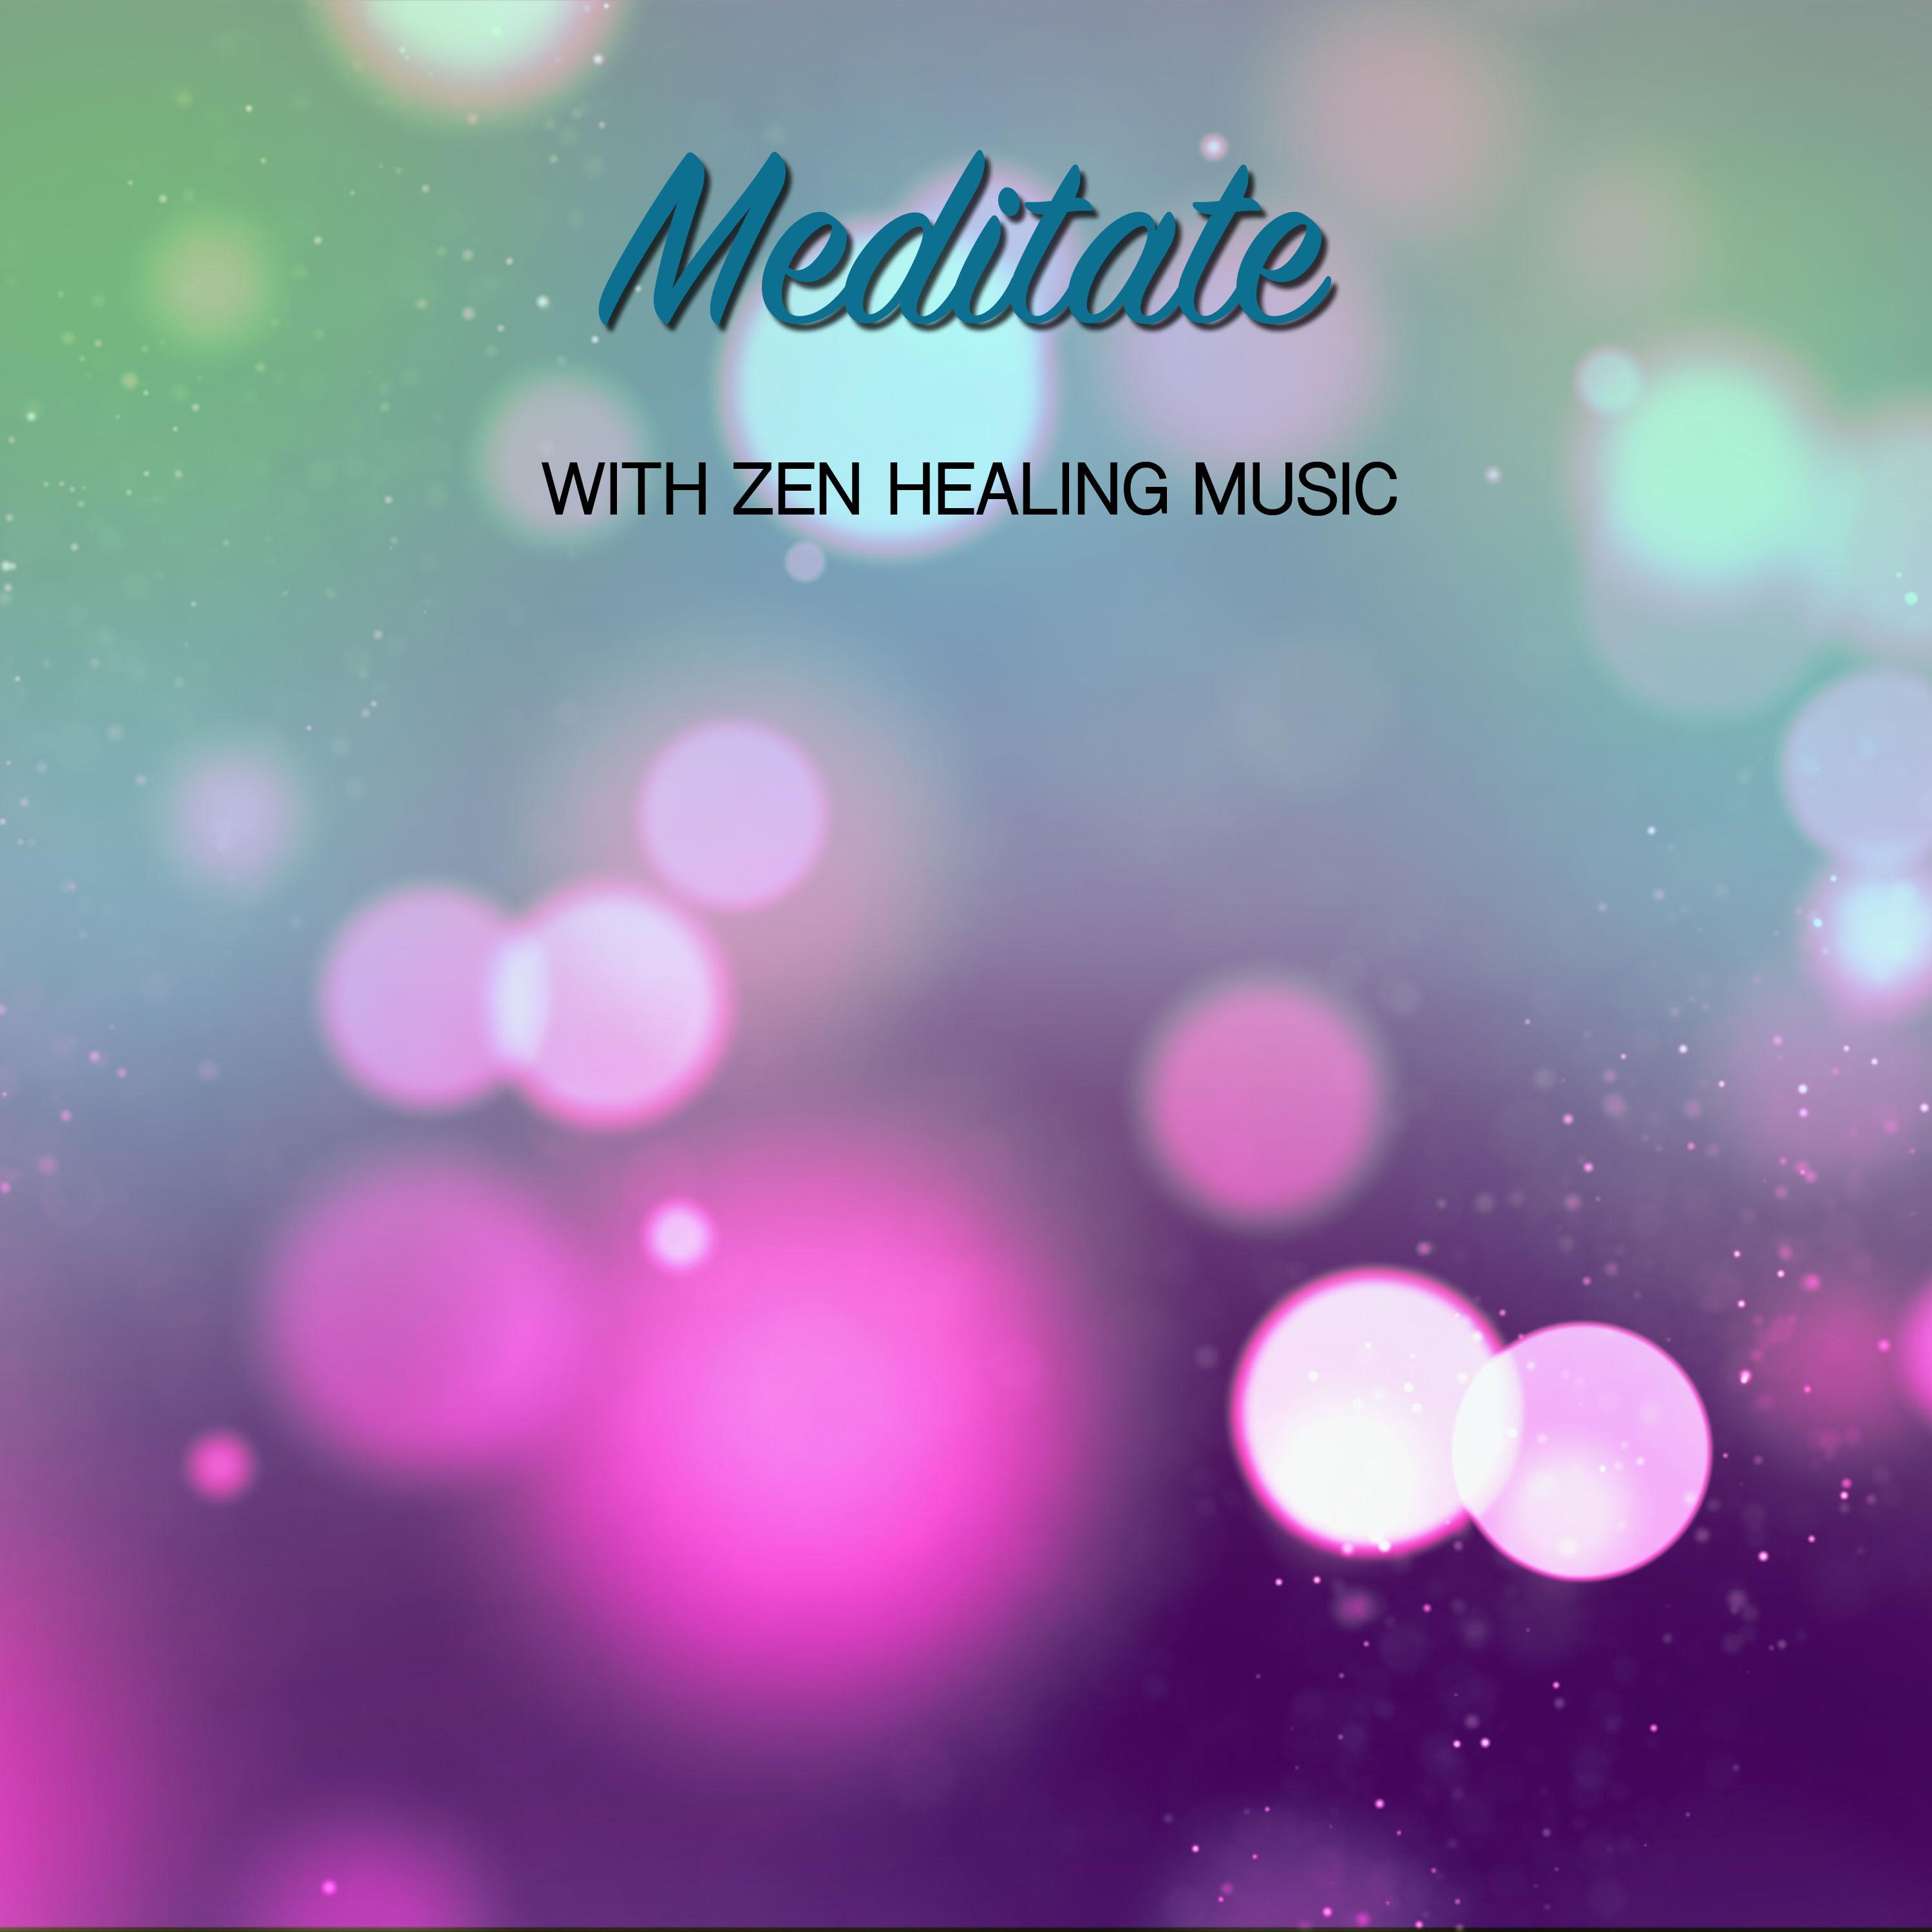 14 Meditate With Zen Healing Music